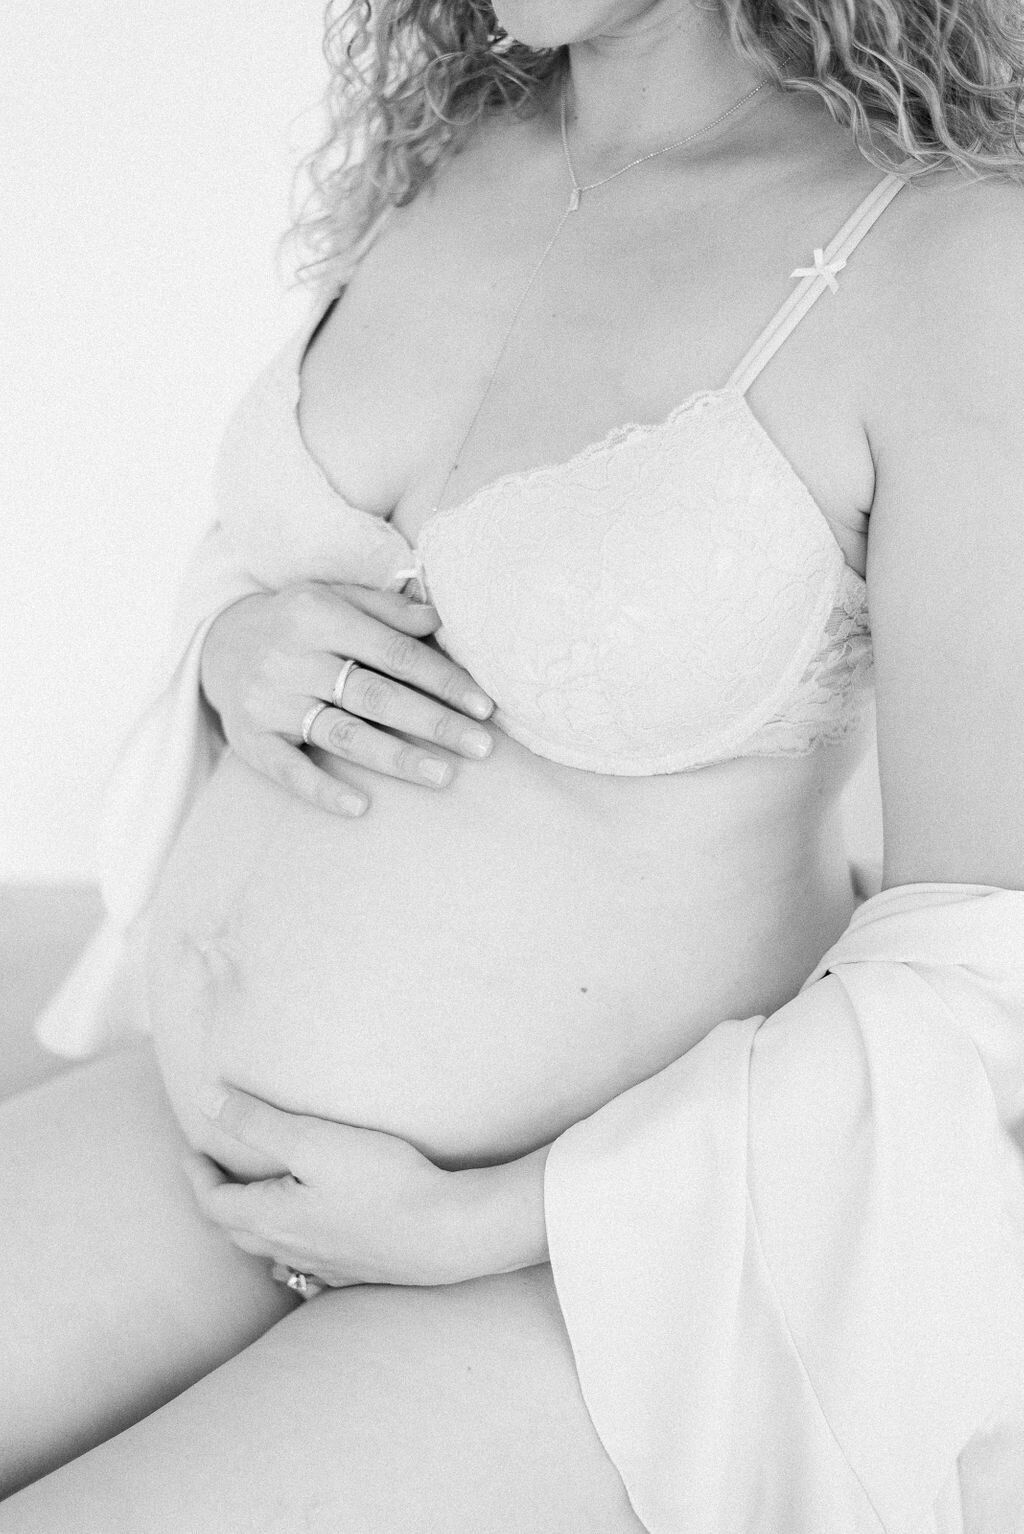 toronto-maternity-photographer44